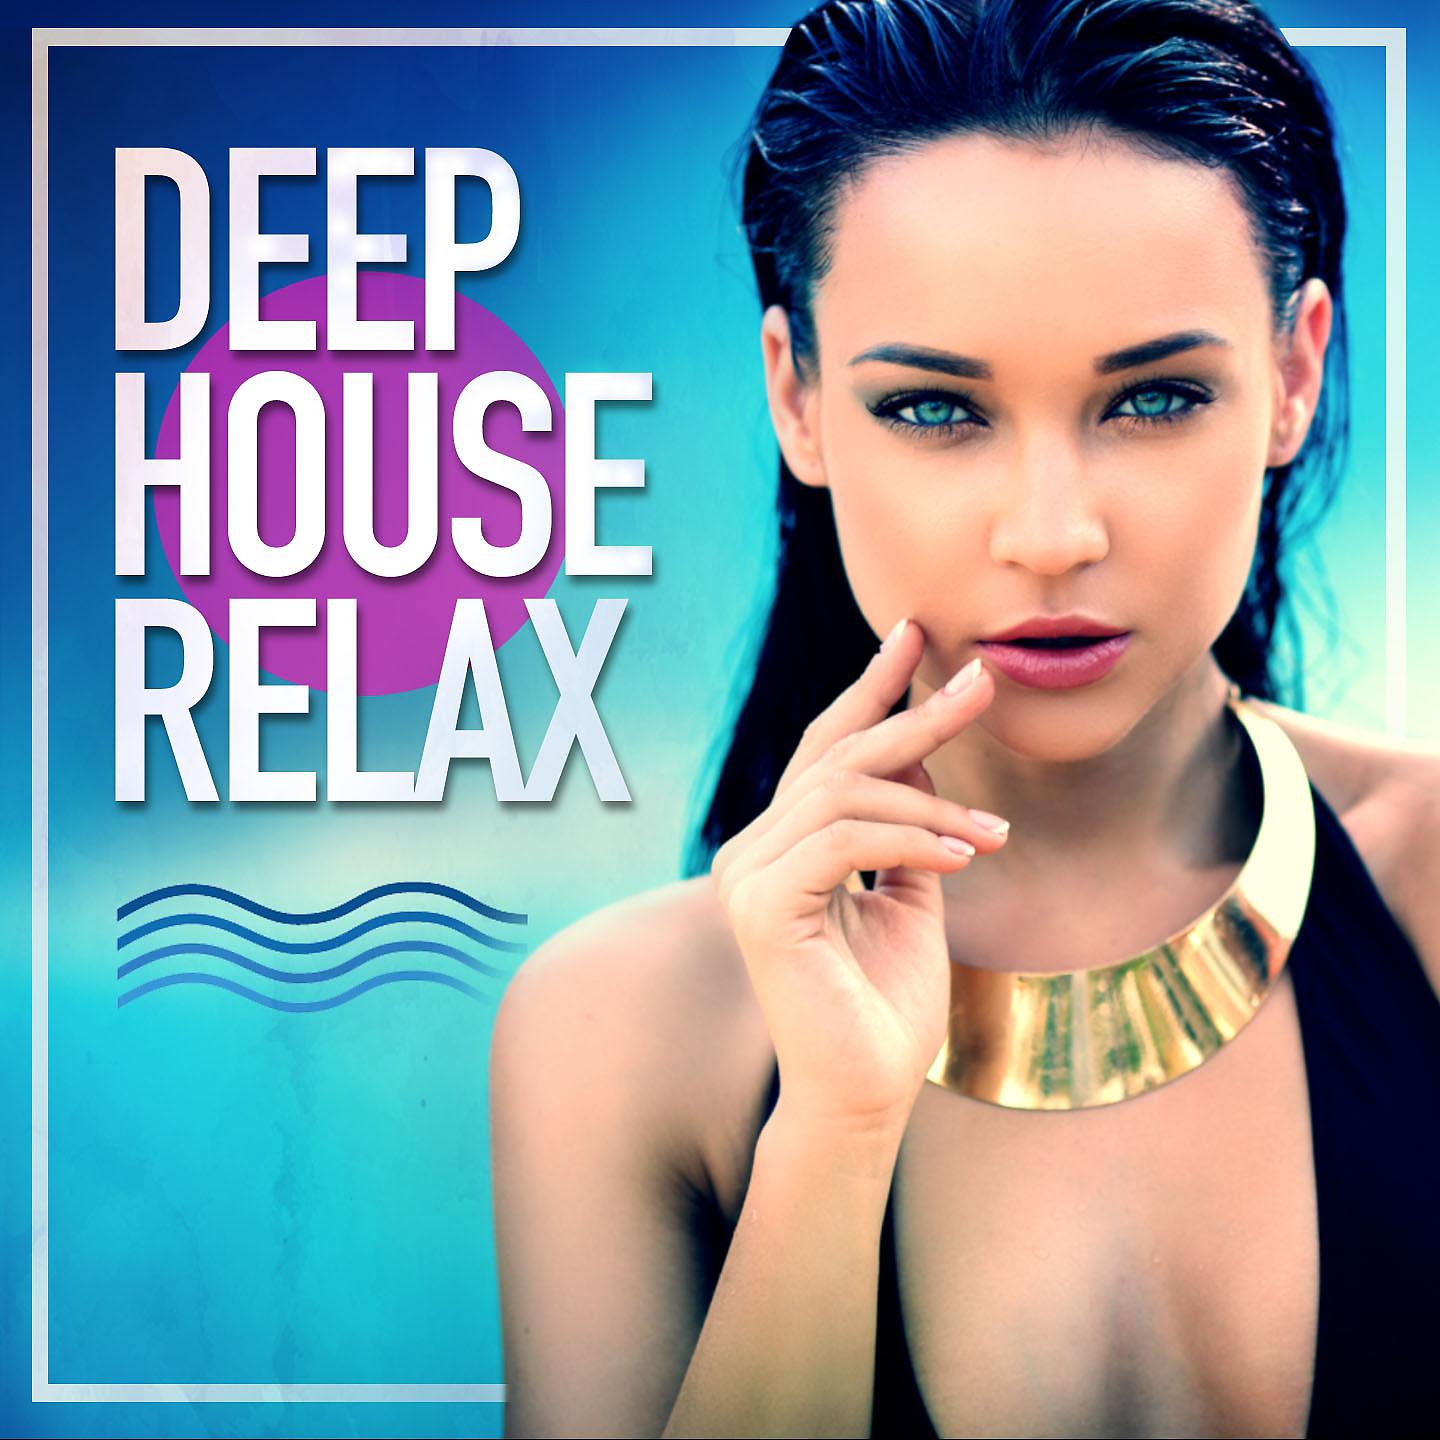 Relax house music. Дип Хаус. Дип Хаус релакс. Deep House Relax обложка. Ремикс дип Хаус.